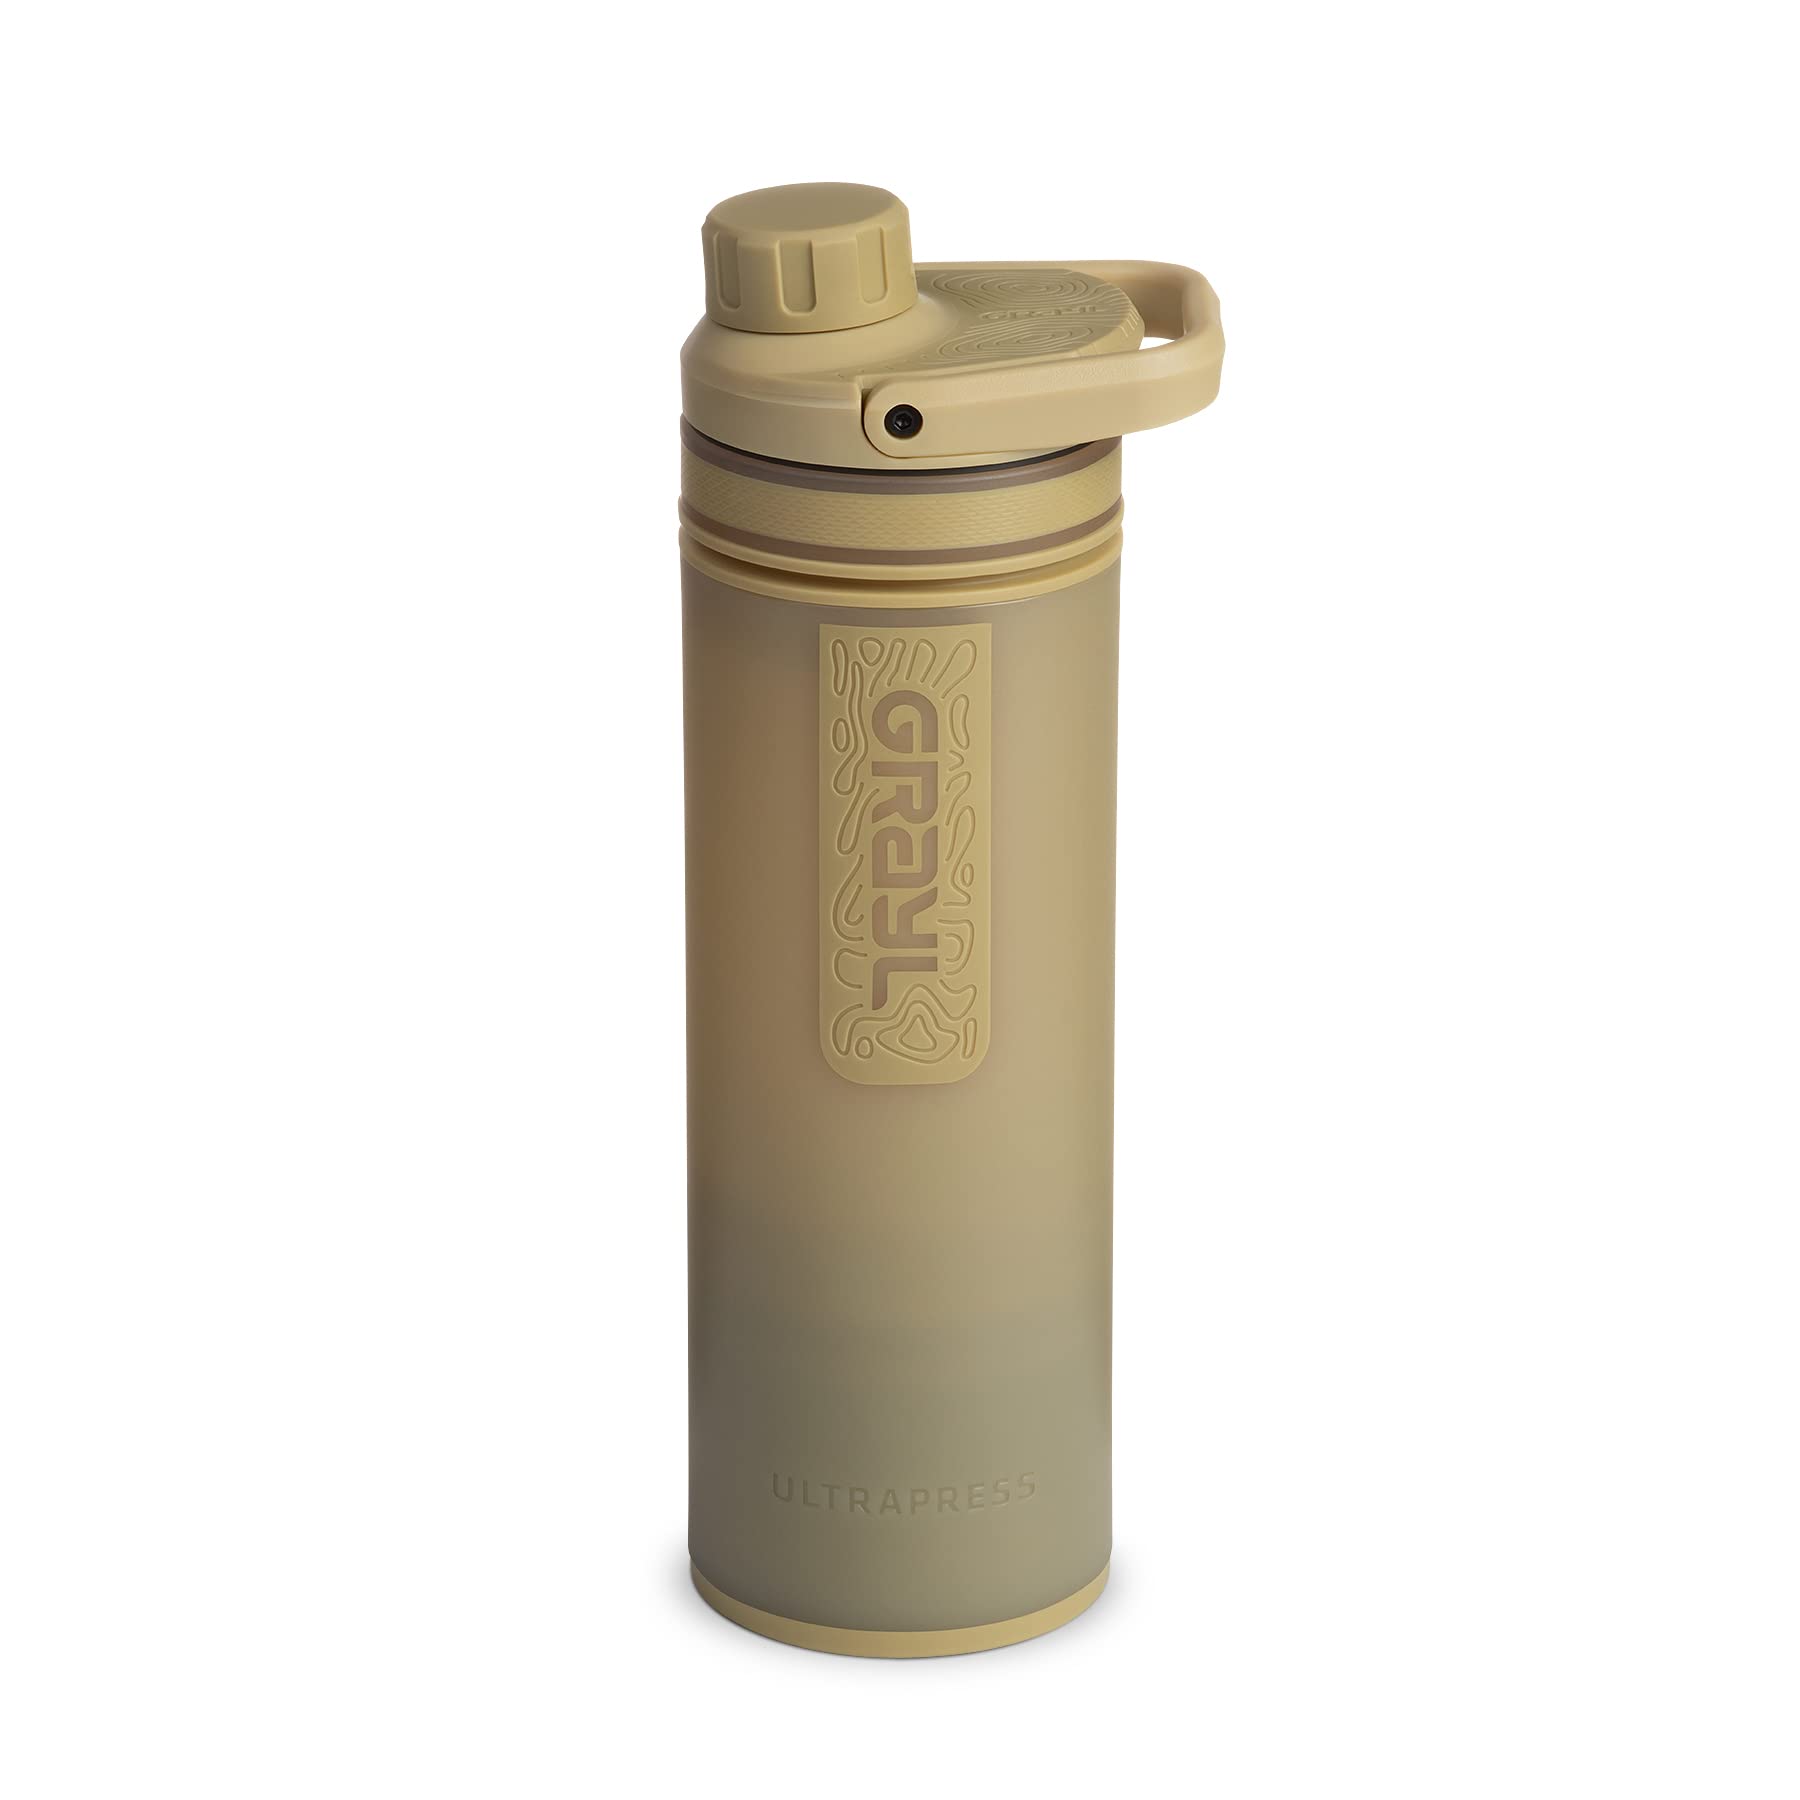 GRAYL UltraPress 16.9 oz Water Purifier & Filter Bottle for Hiking, Backpacking, Survival, Travel (Desert Tan)